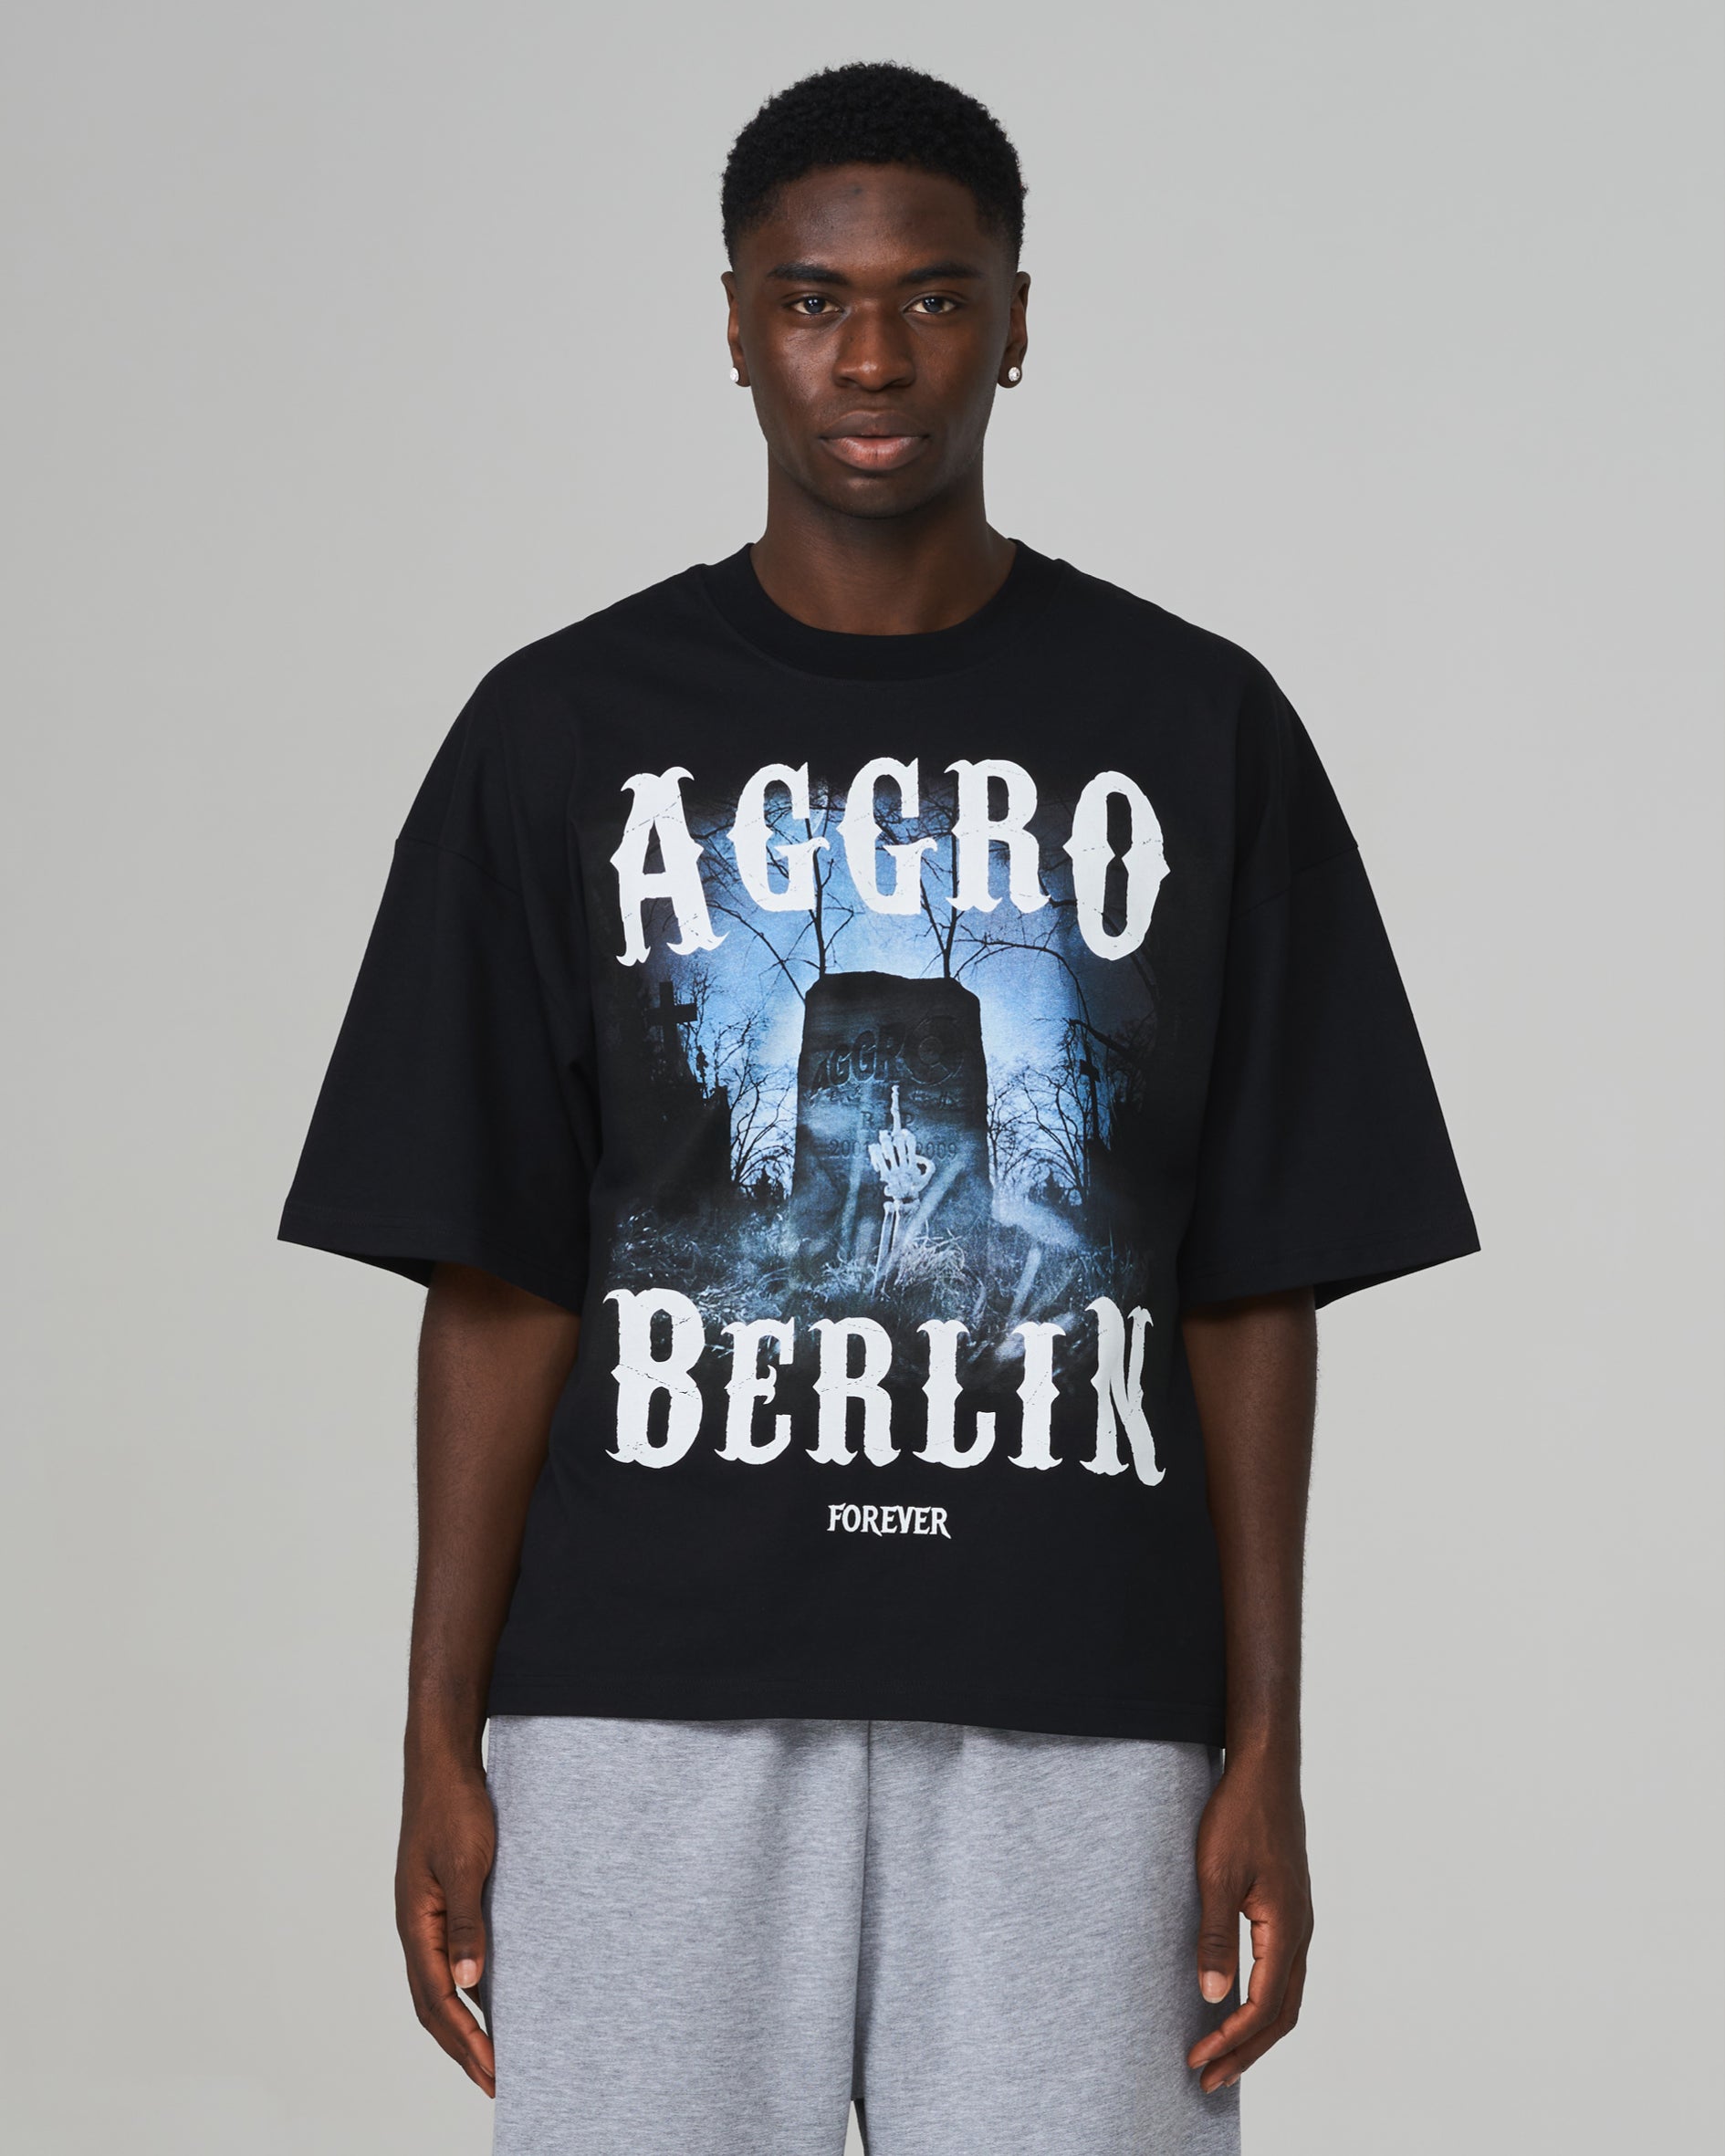 AGGRO Berlin - AGGRO Forever T-Shirt Schwarz